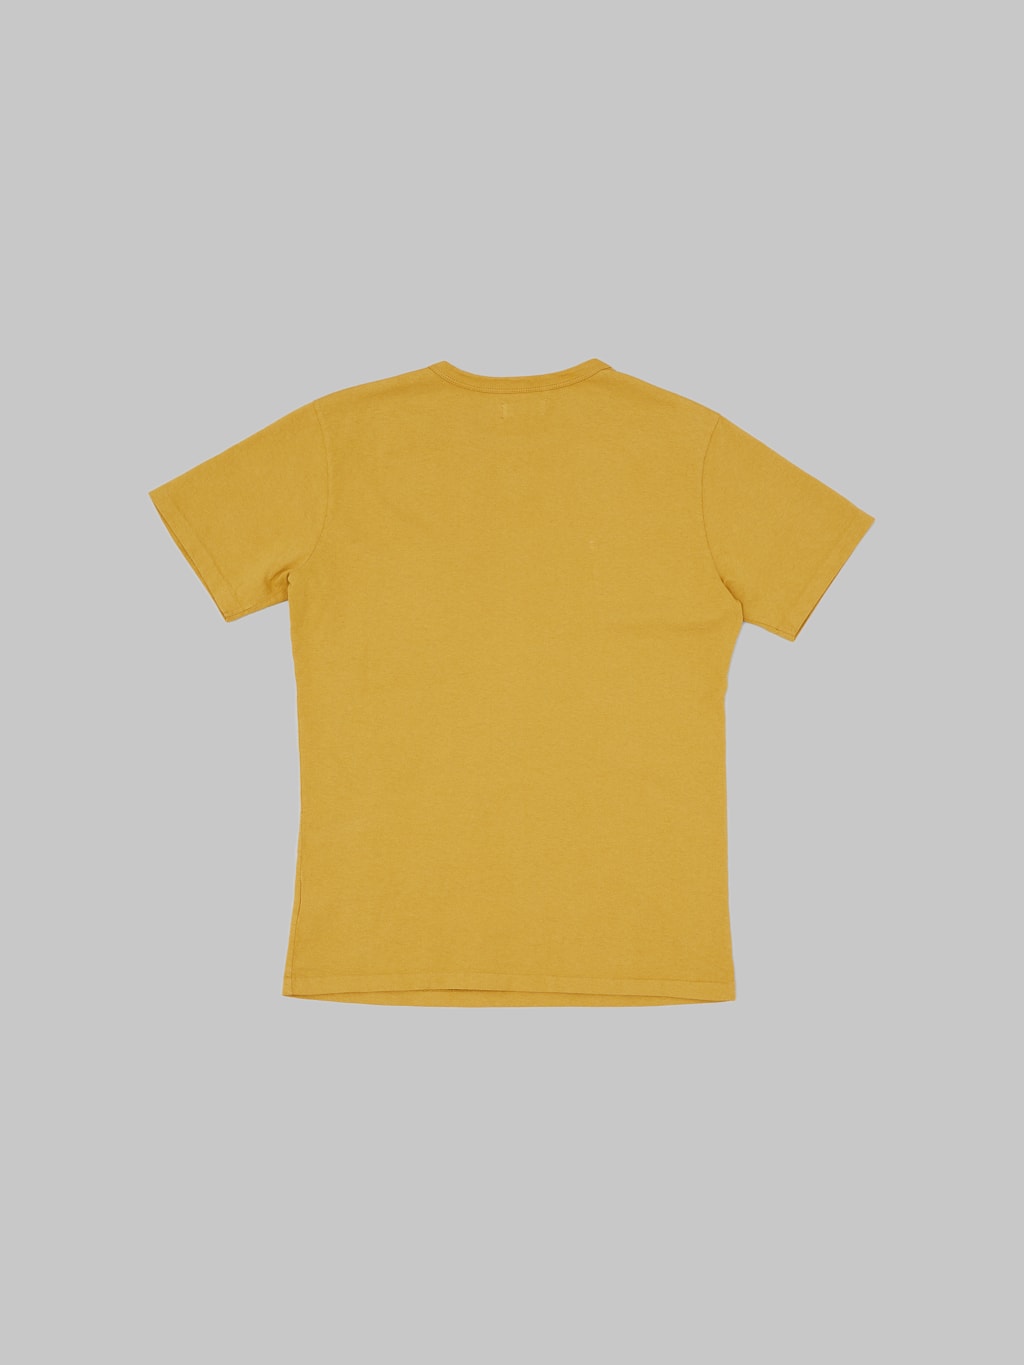 freenote cloth 9 ounce pocket t shirt mustard heavyweight back